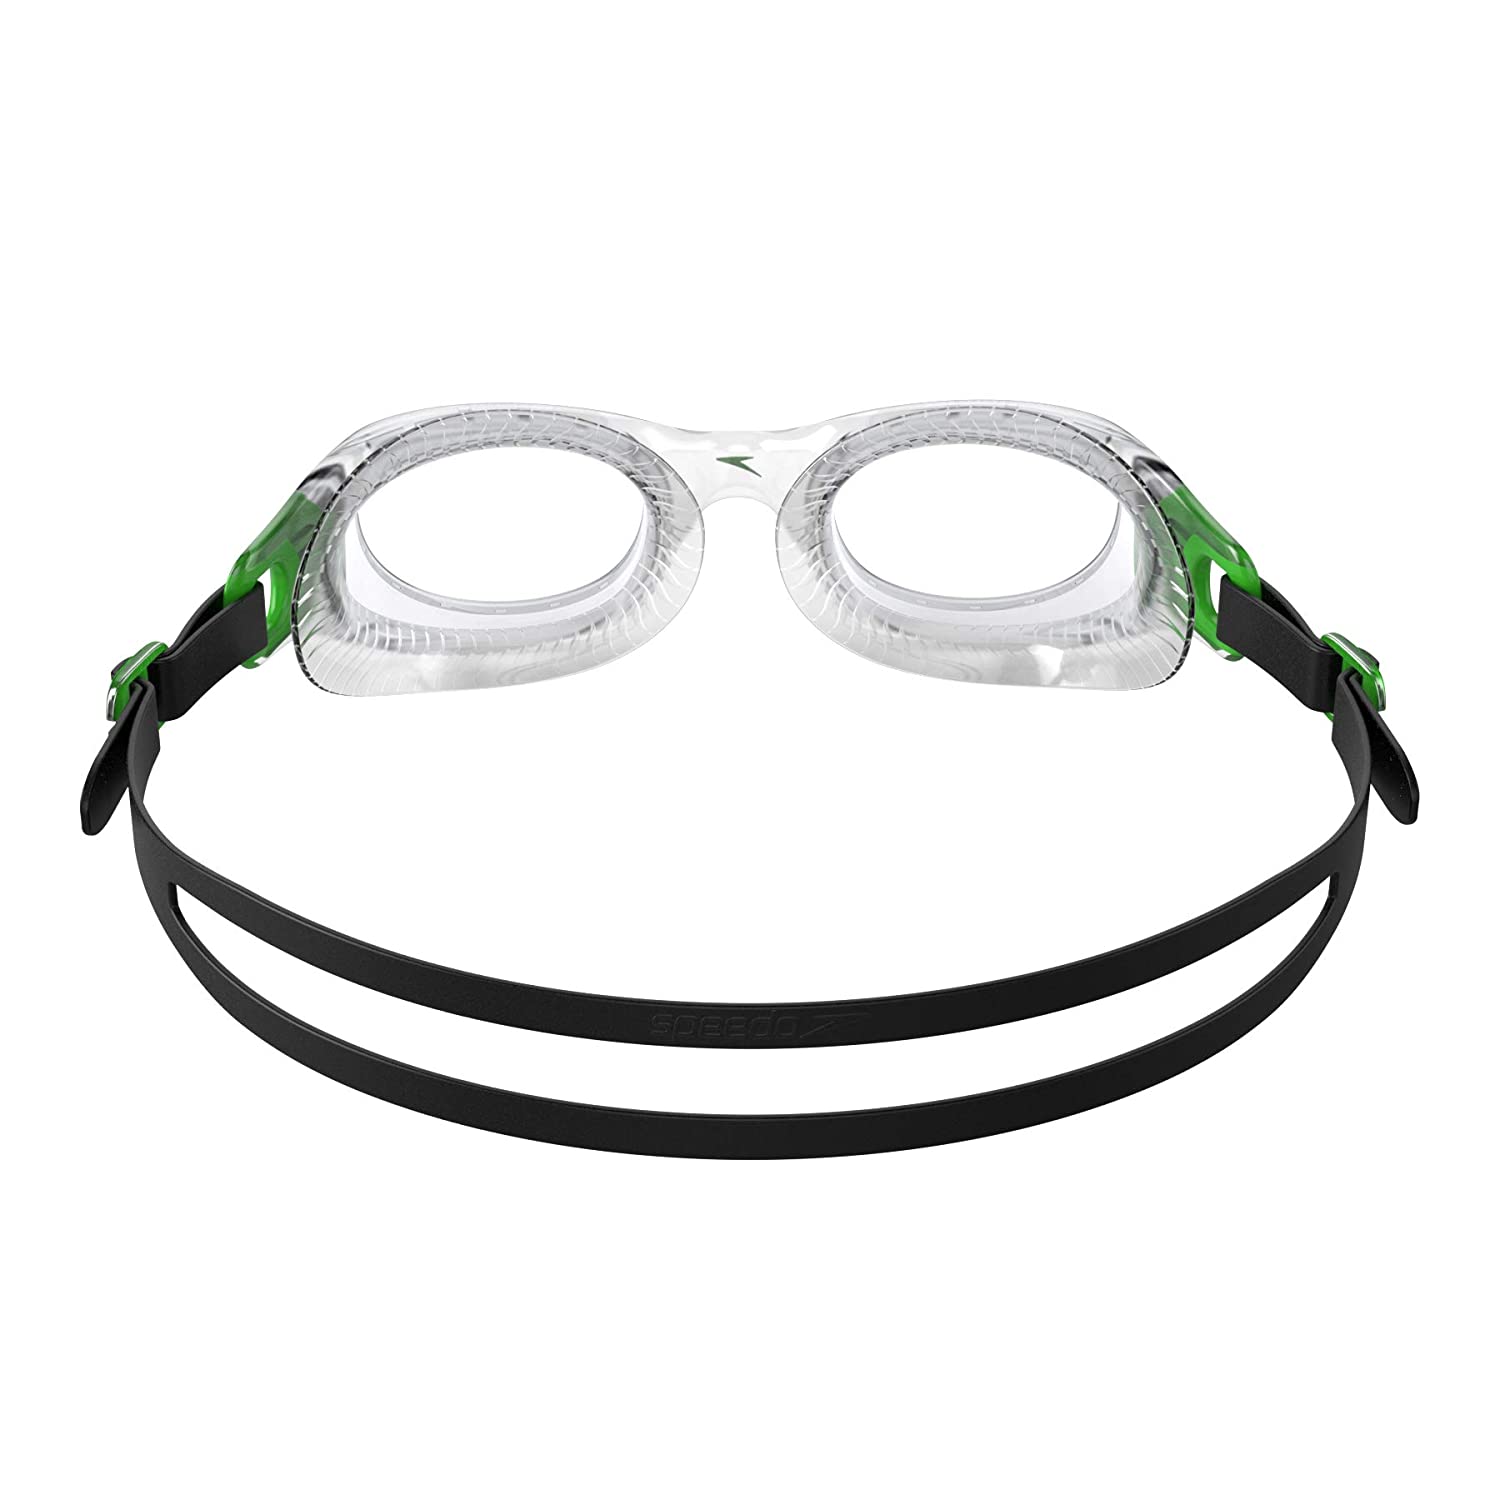 Speedo 810898B568 Futura Classic Goggles, Green/Clear - Best Price online Prokicksports.com